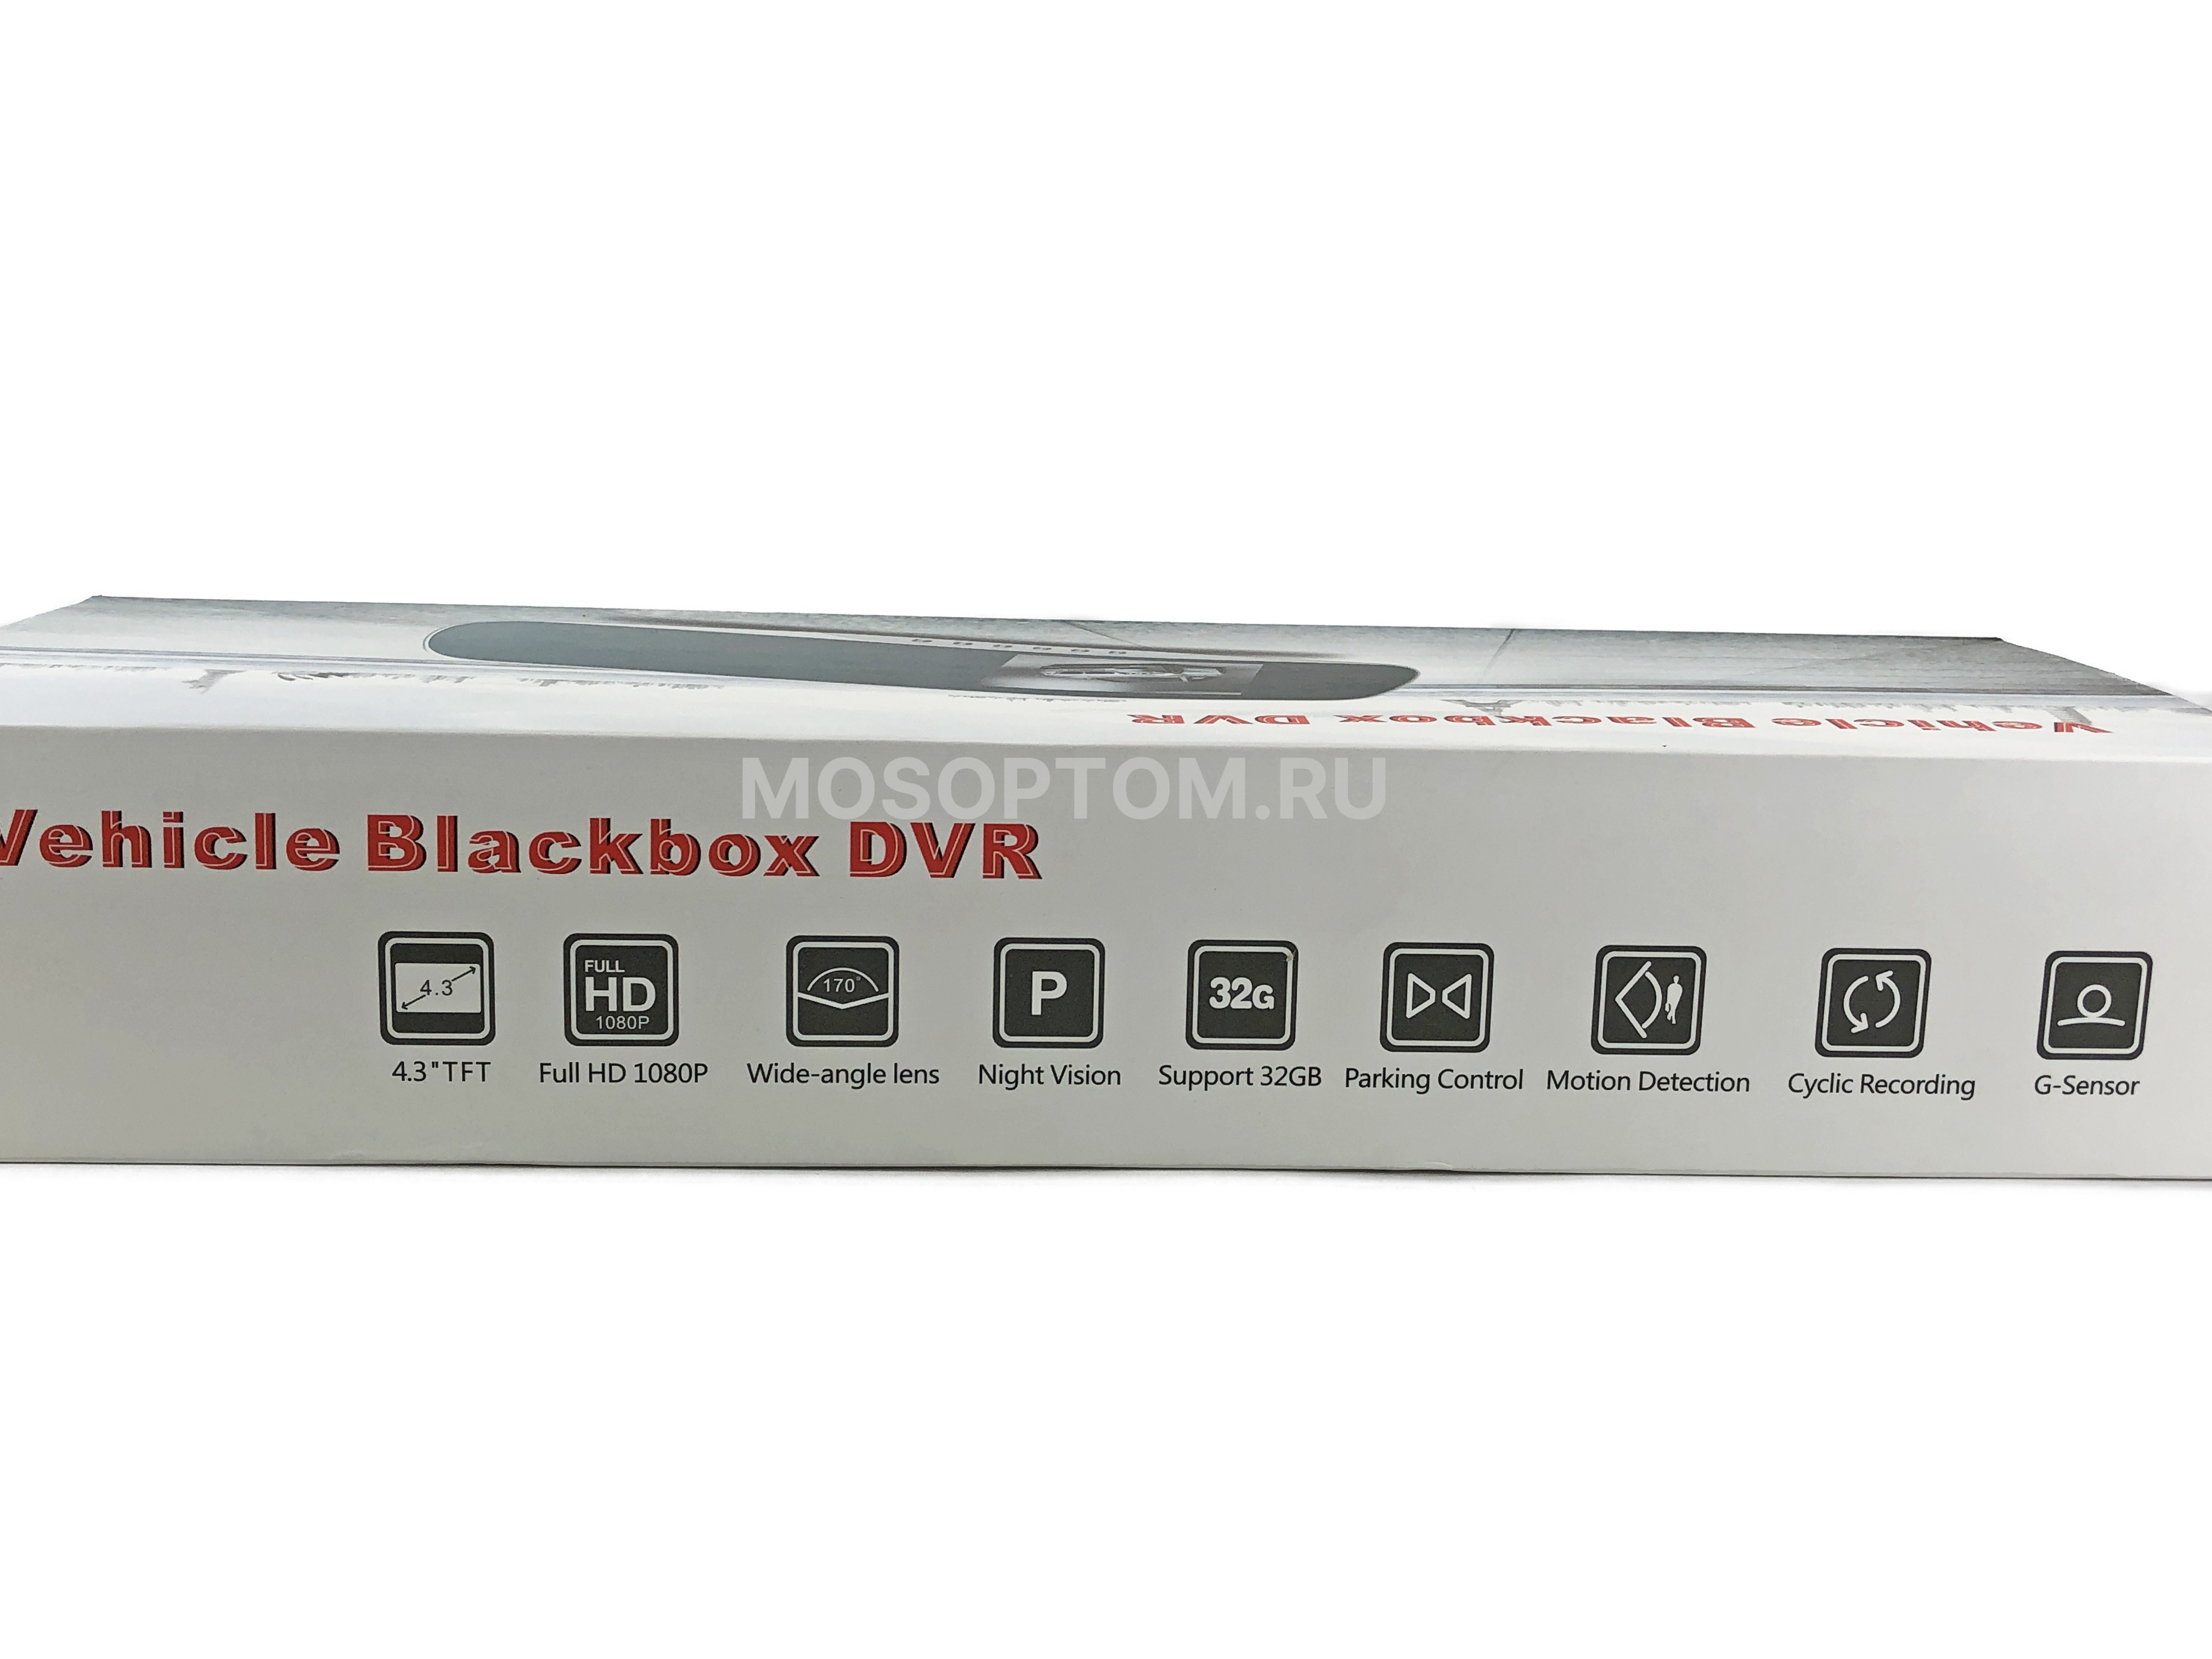 Зеркало заднего вида со встроенным видеорегистратором Vehicle Blackbox DVR оптом